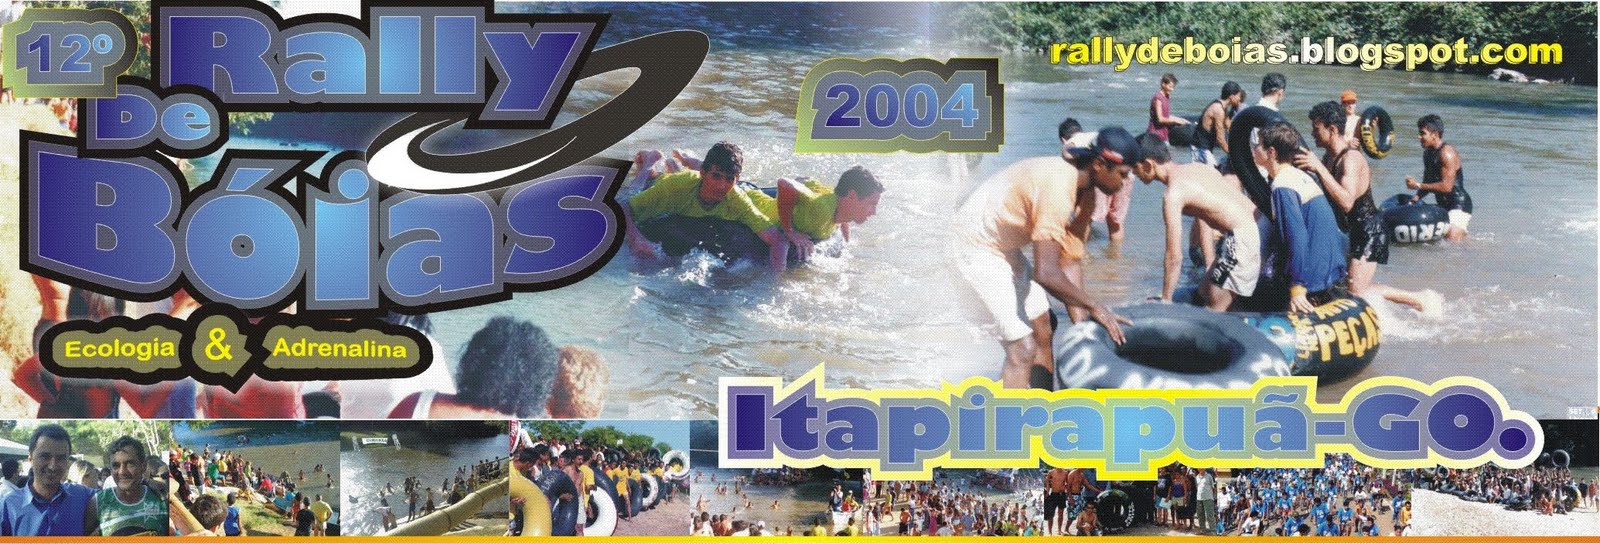 12° Rally de Bóias de Itapirapuã 2004